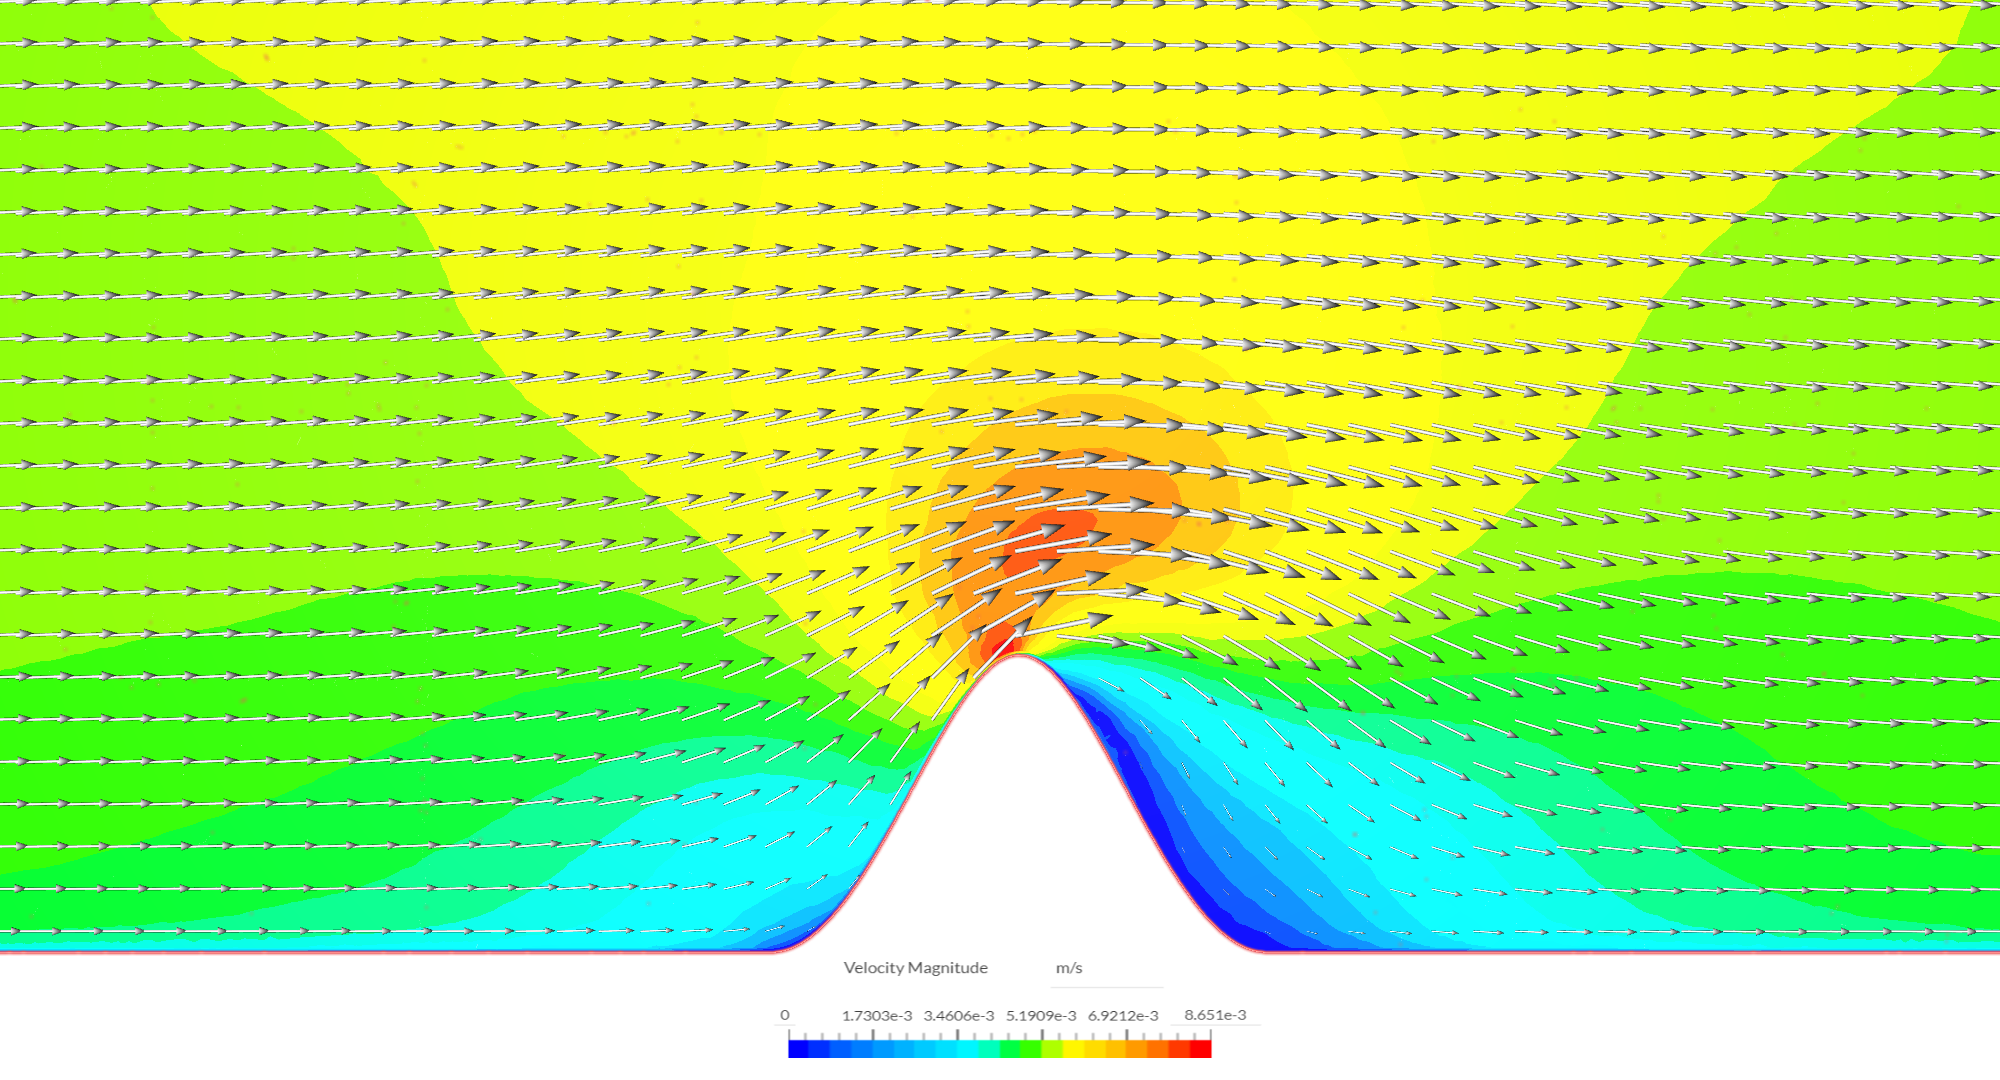 Ridge wind simulation image